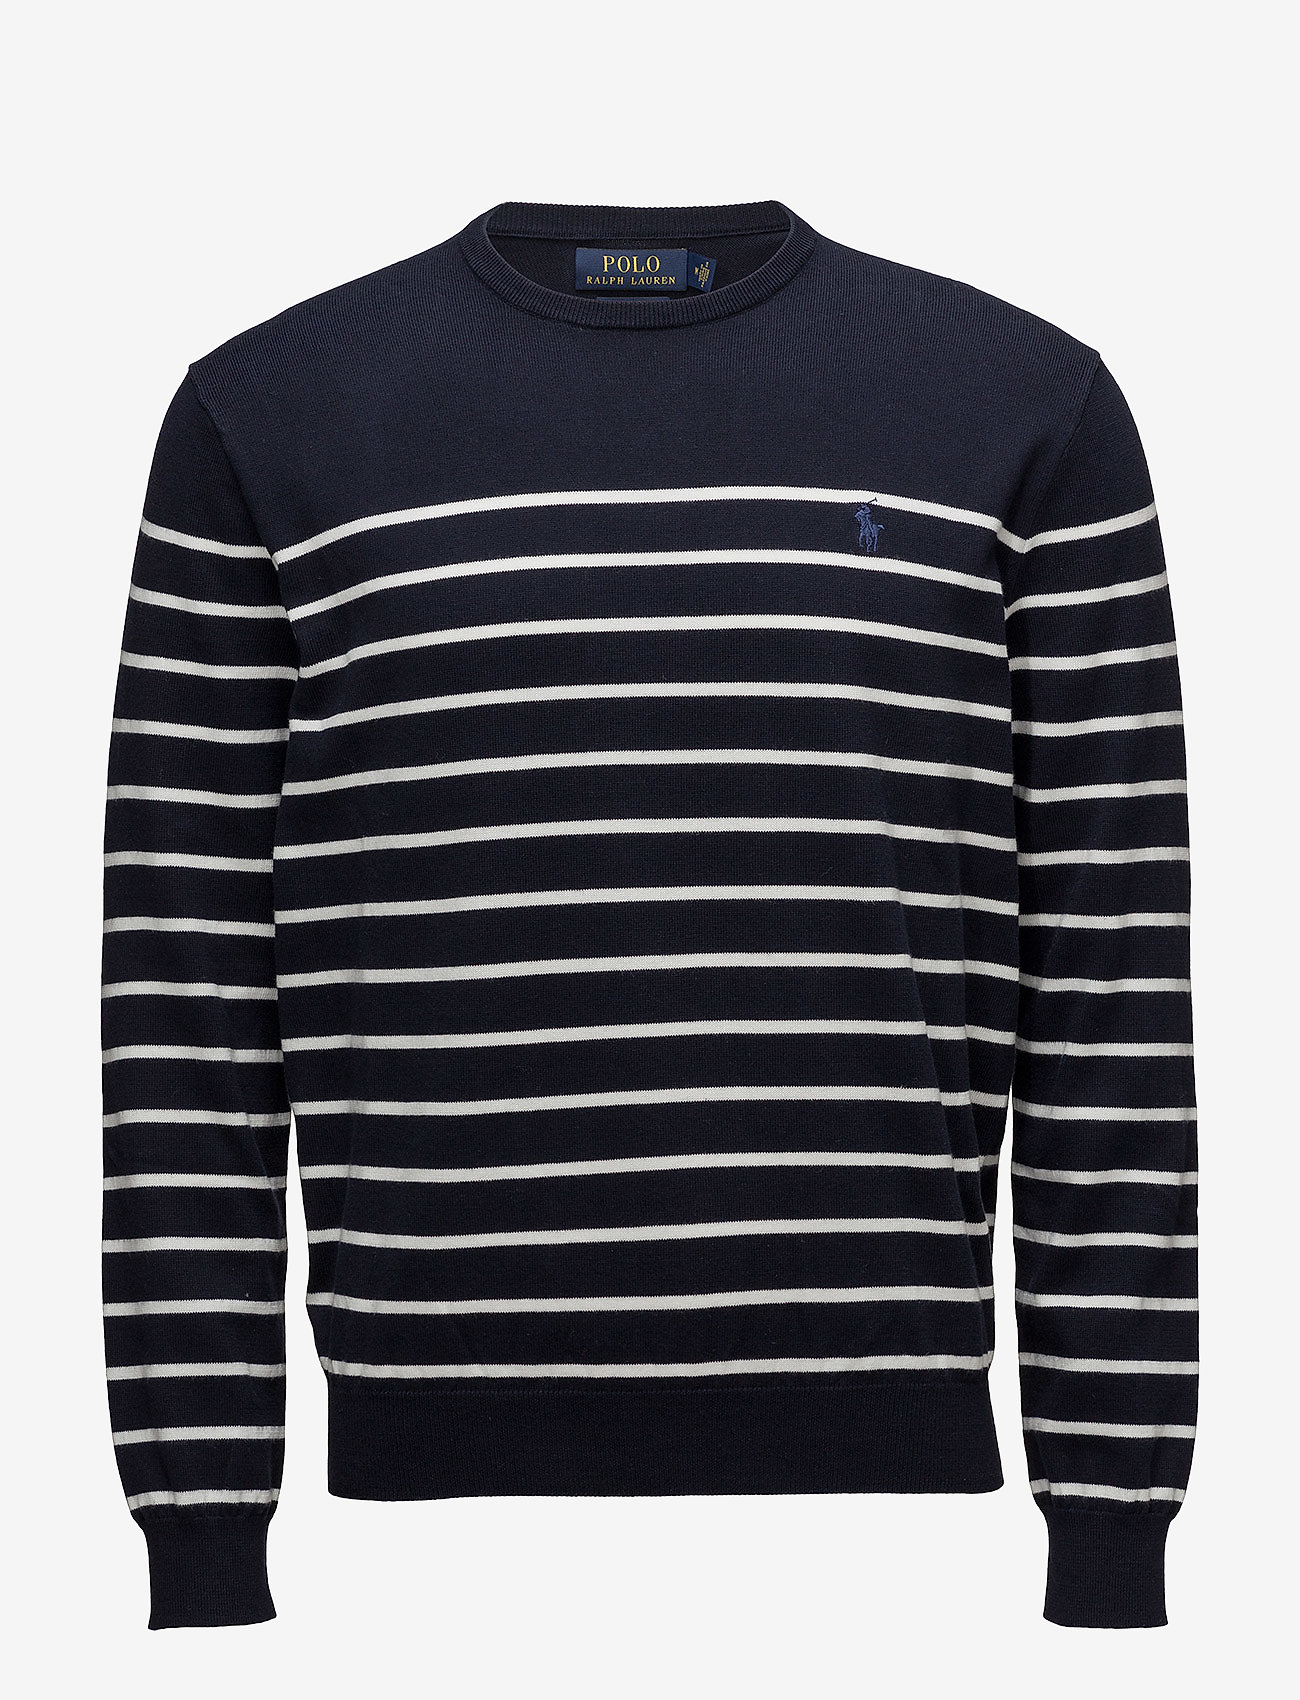 polo ralph lauren striped sweater